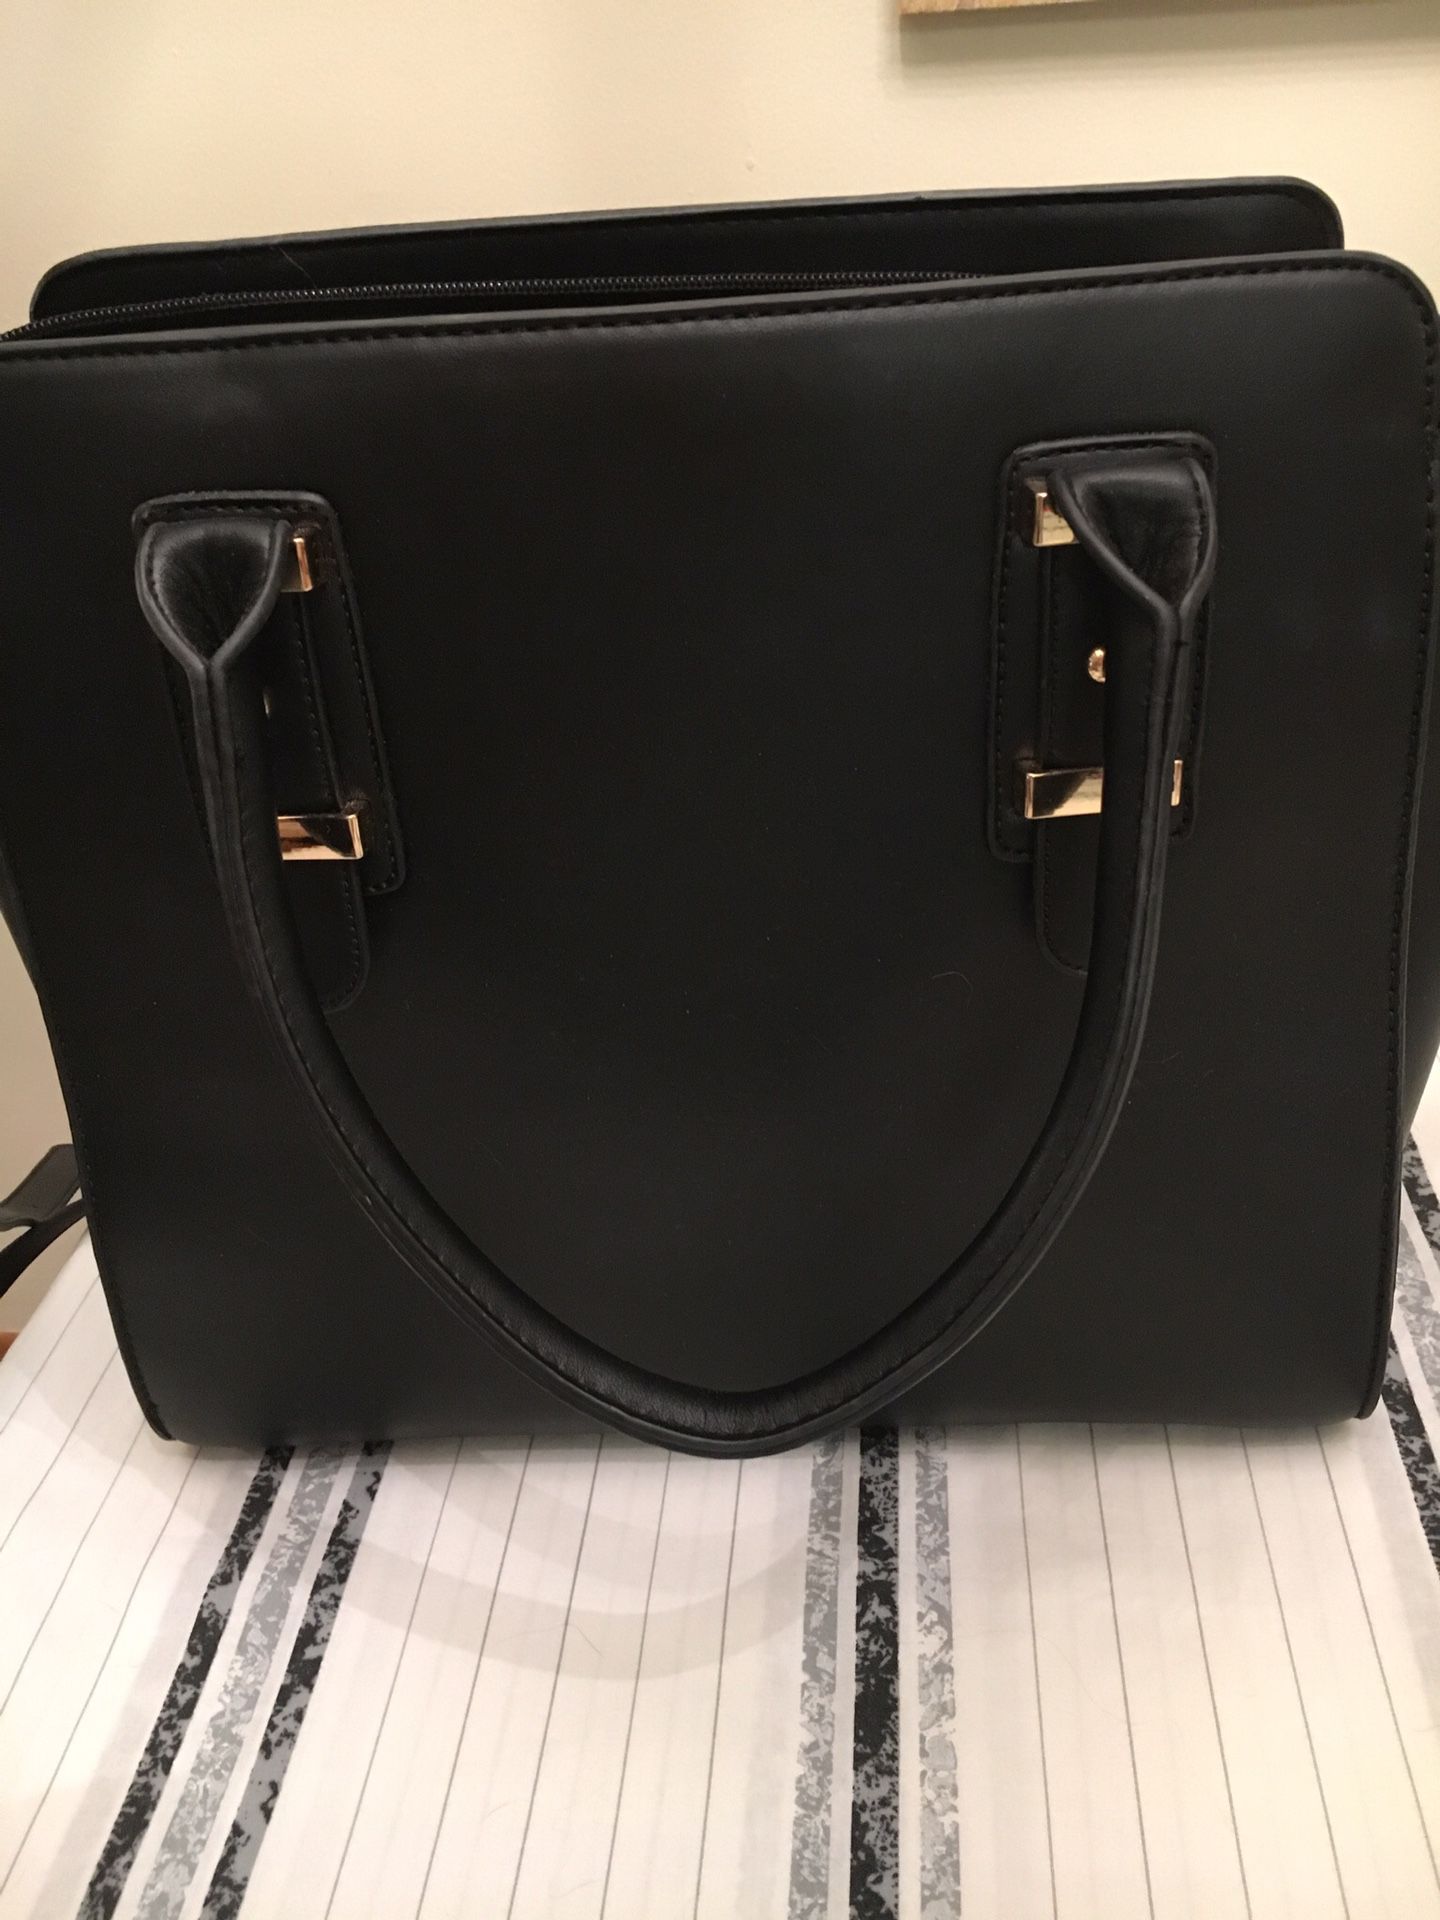 Beautiful, new, black leather handbag